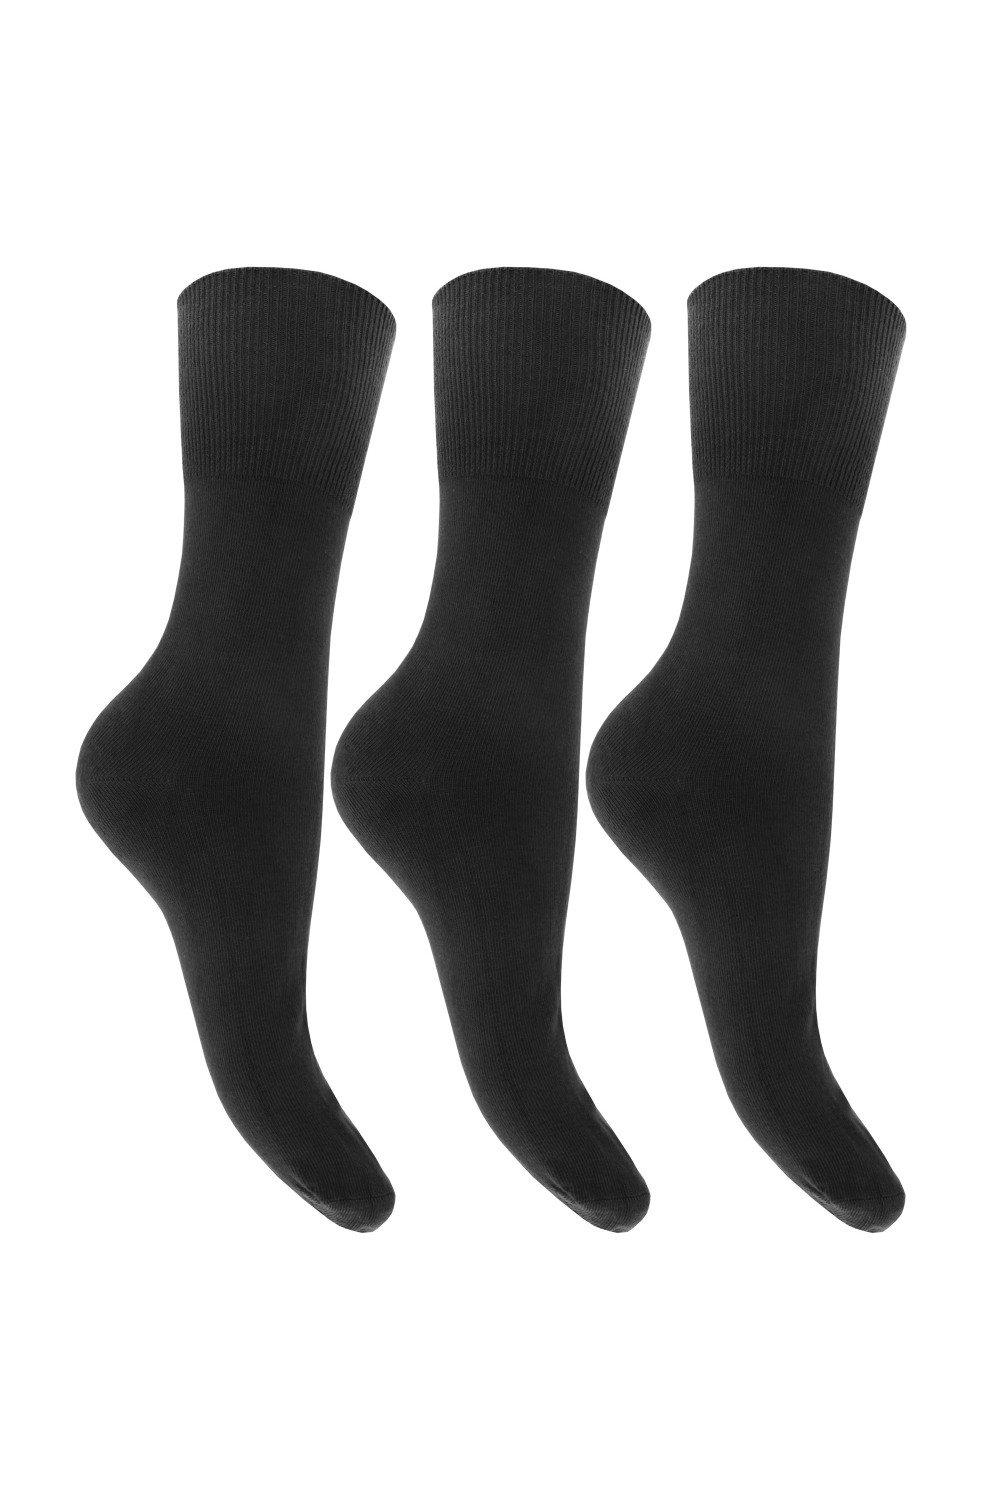 Plain Cotton Rich Non Elastic Top Socks (Pack Of 3)